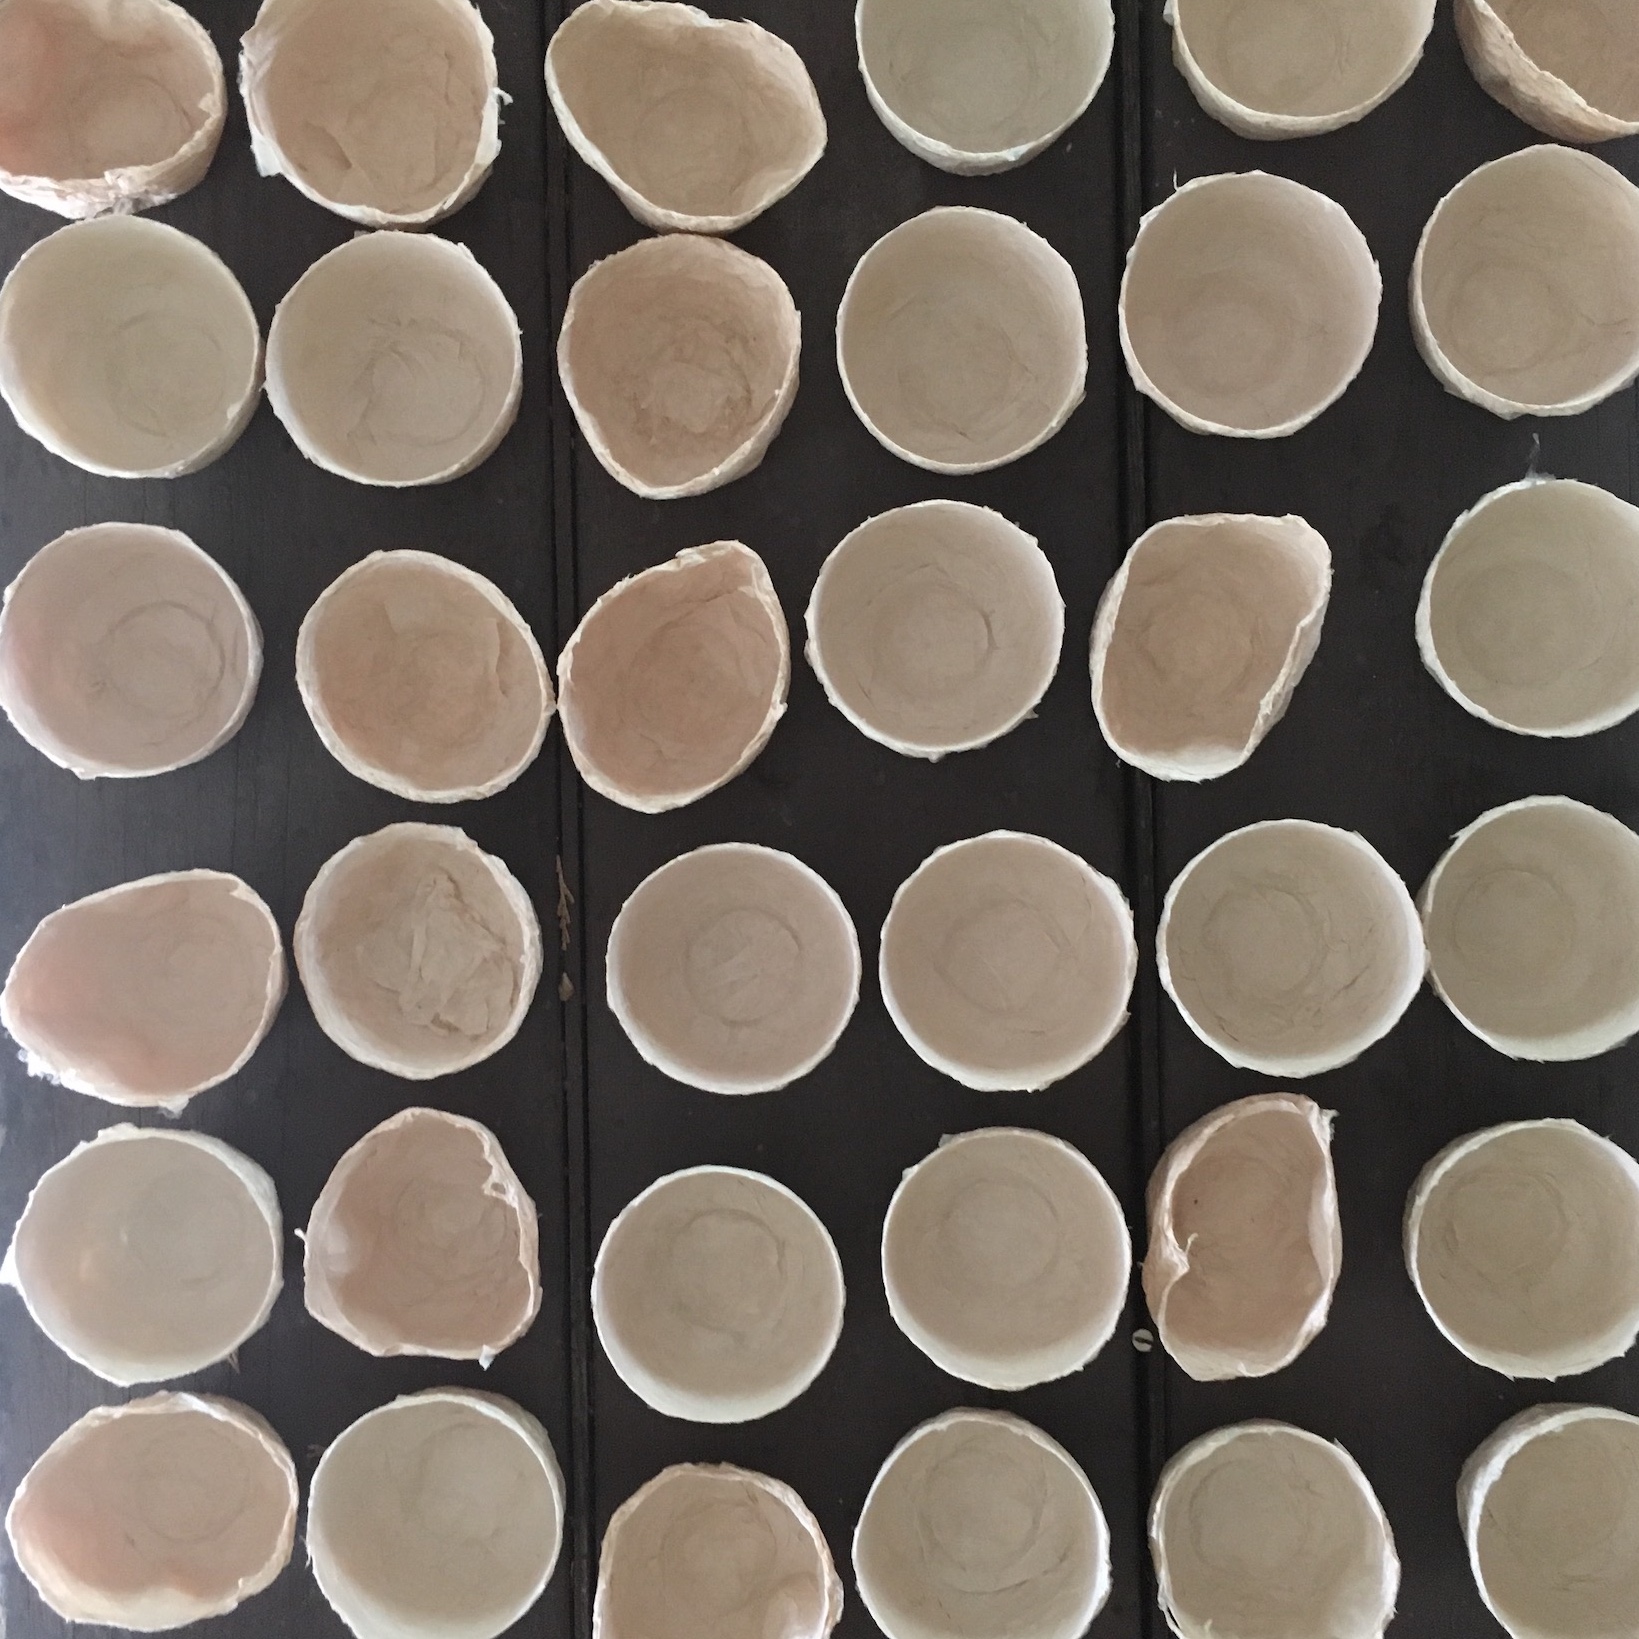 PHOTO 156 process - teacups dried.jpg